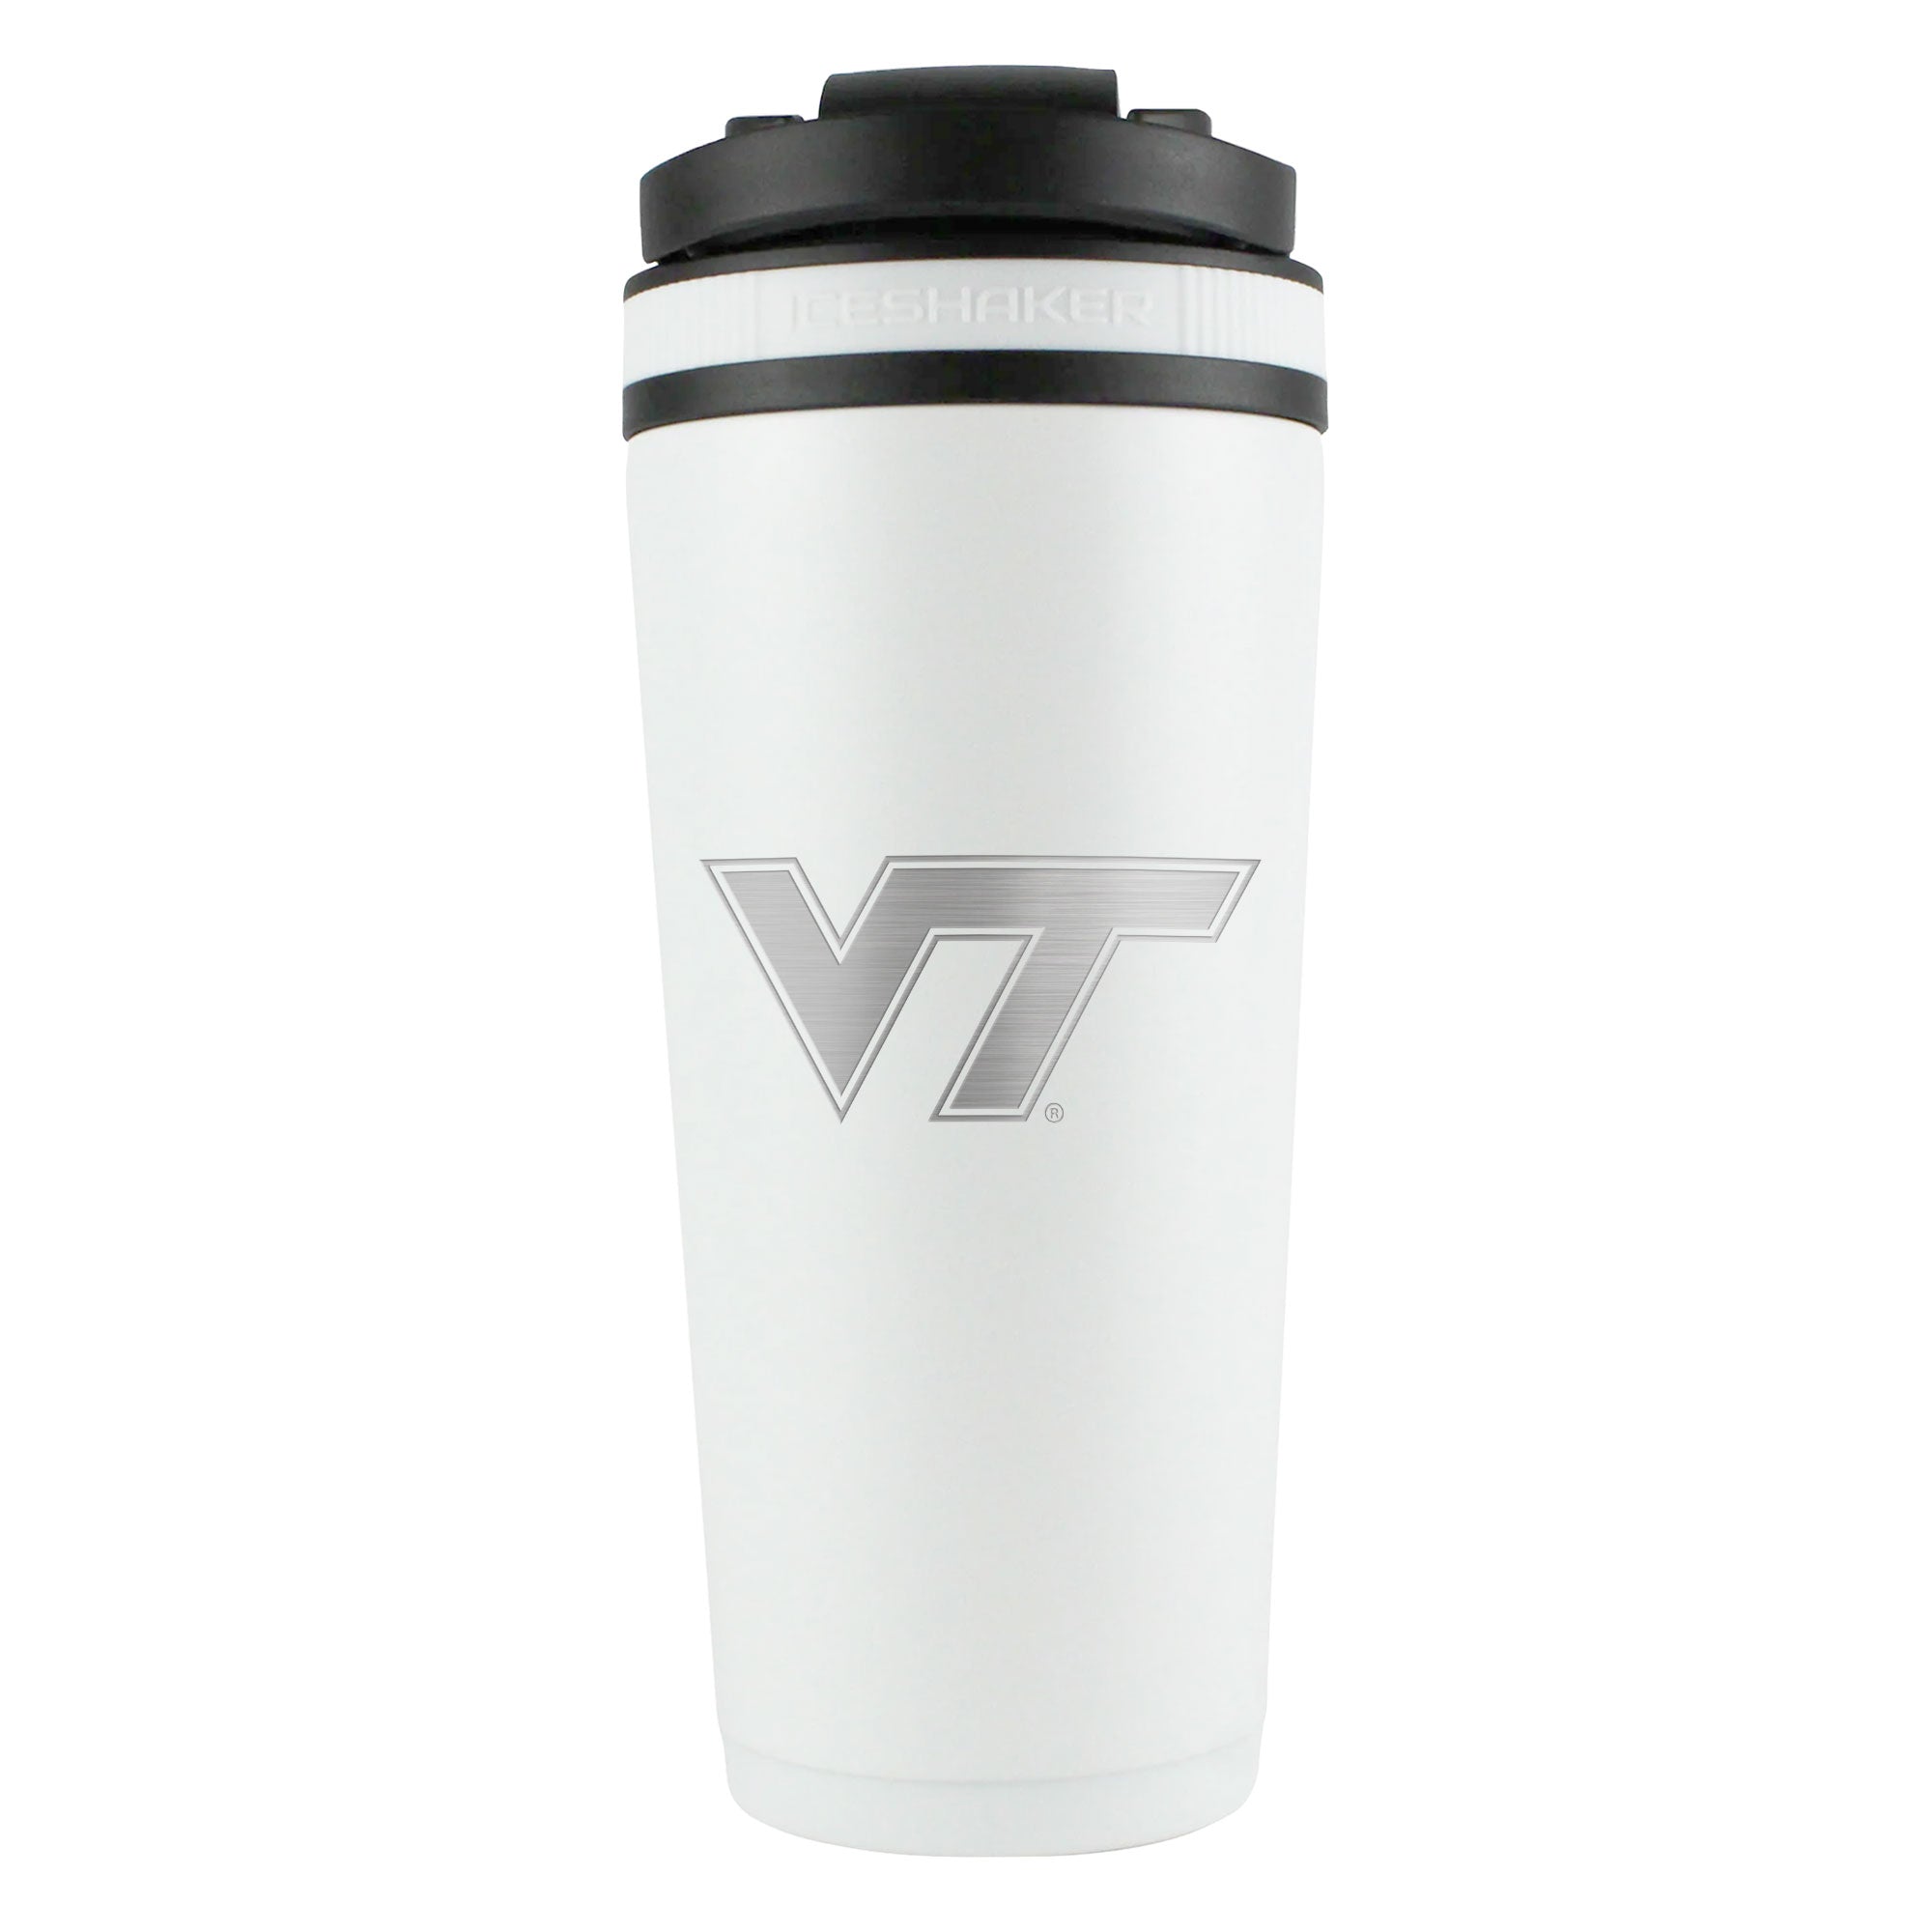 Officially Licensed Virginia Tech 26oz Ice Shaker - White